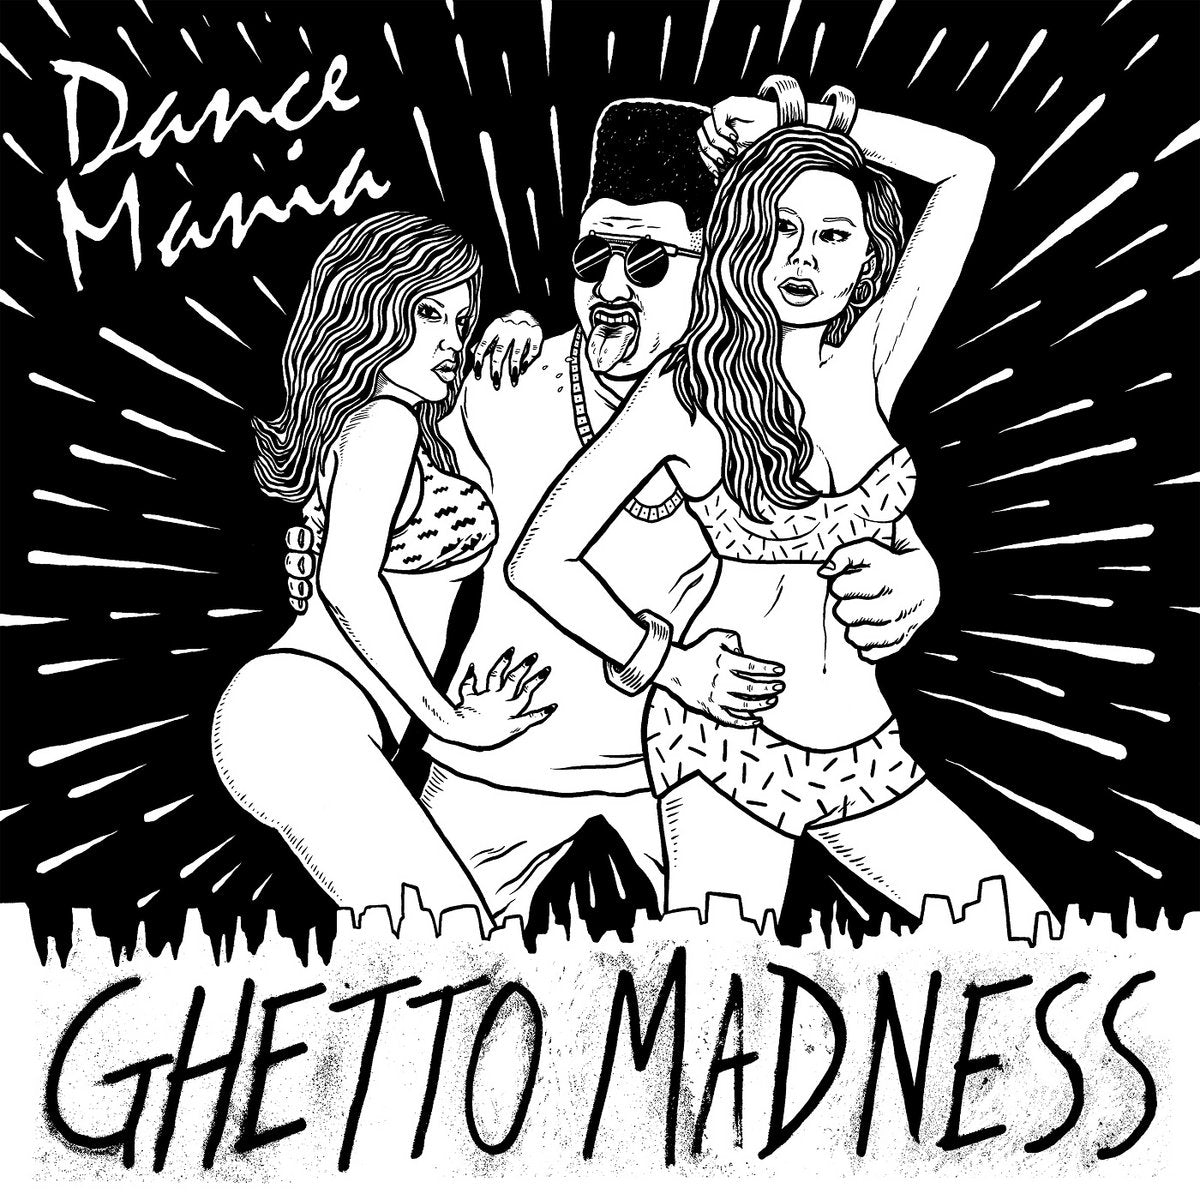 Various Artists - Dance Mania: Ghetto Madness